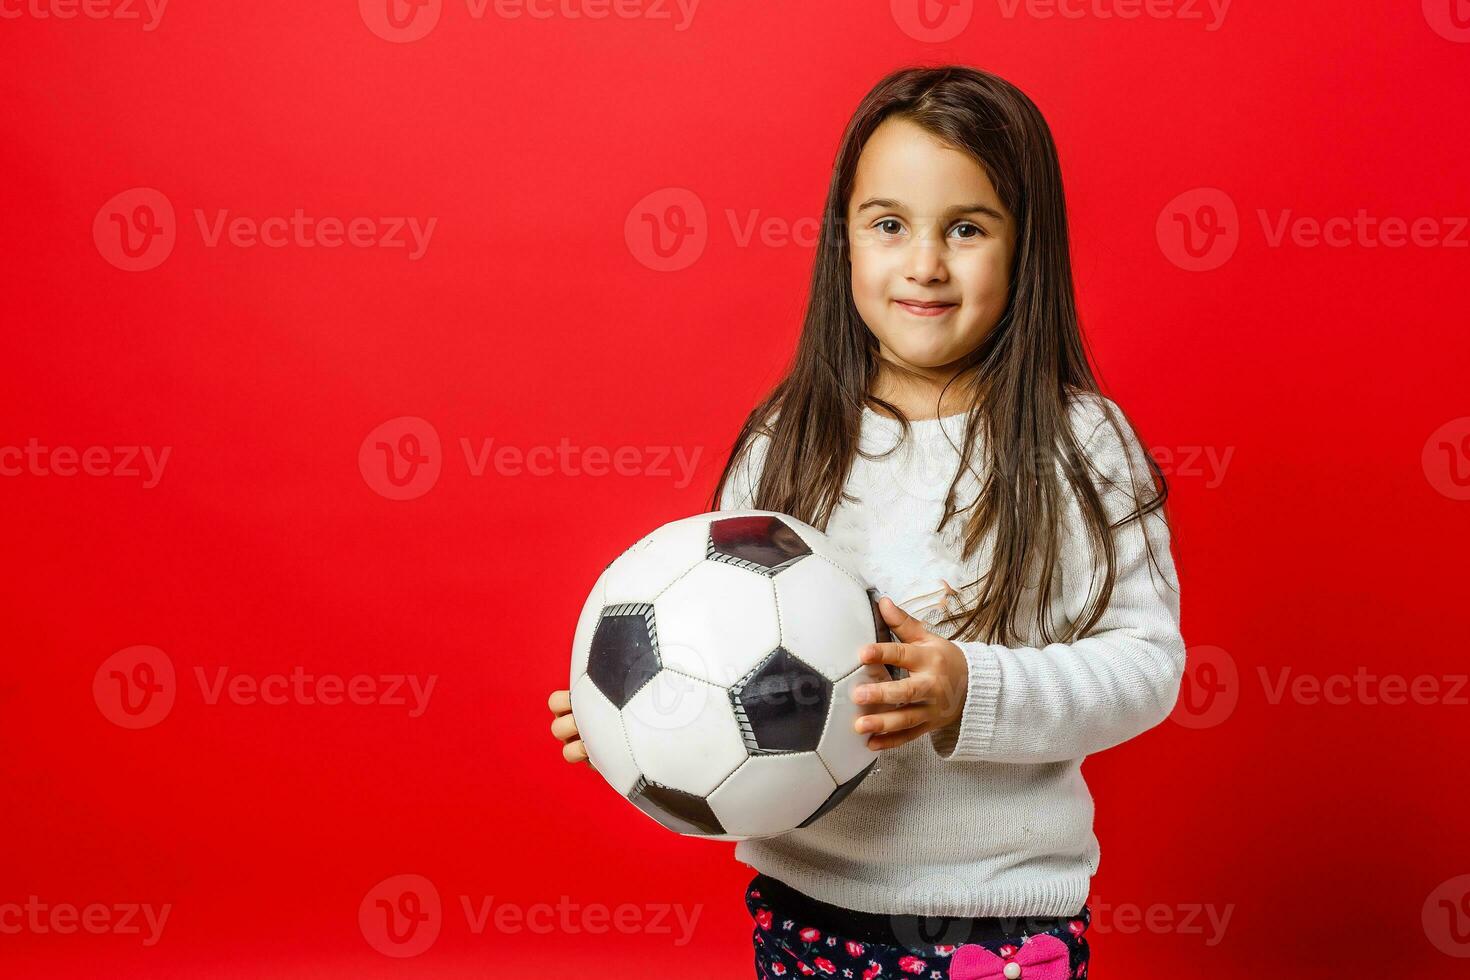 weinig meisje met de bal over- rood backgrounf foto